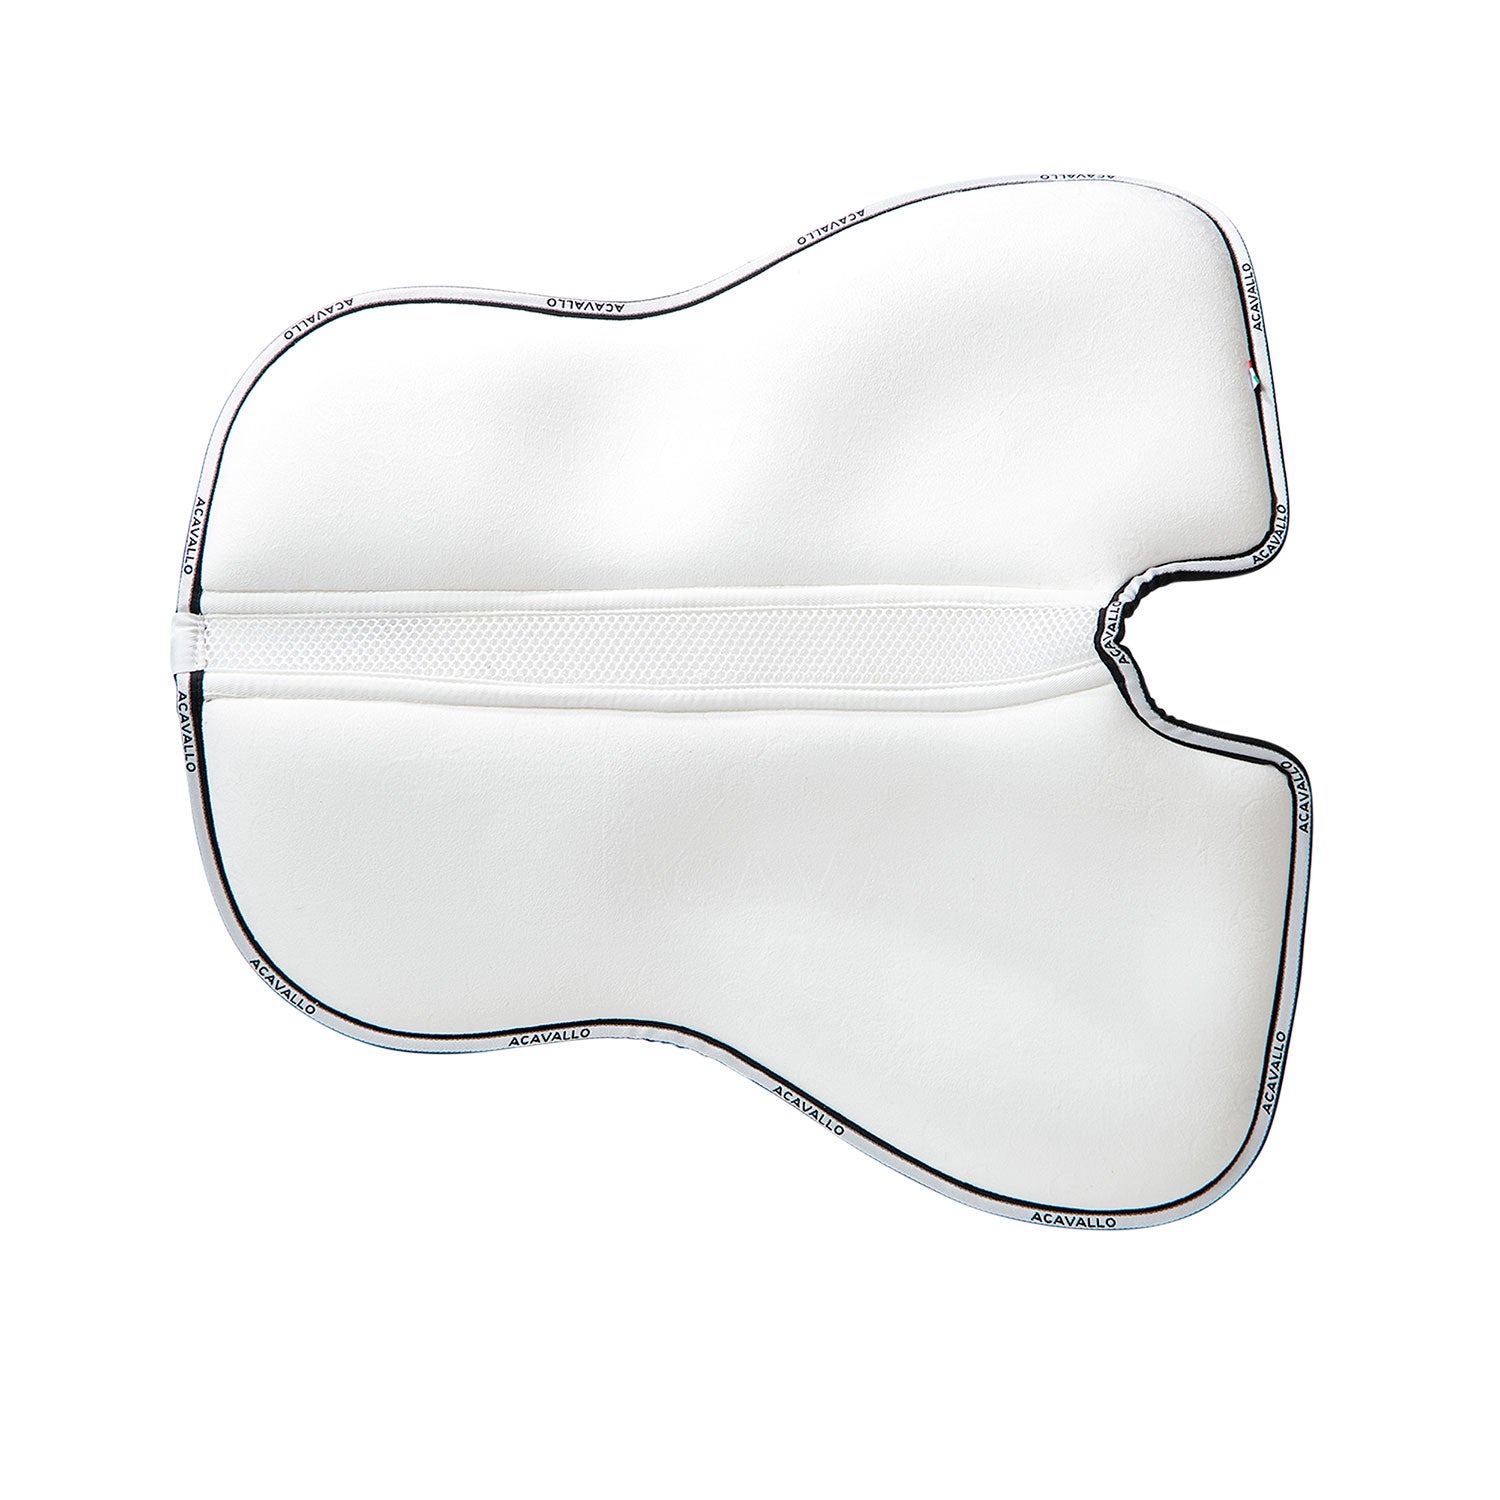 Pad Withers shaped 3D spine dressage pad silicone grip - Reitstiefel Kandel - Dein Reitshop